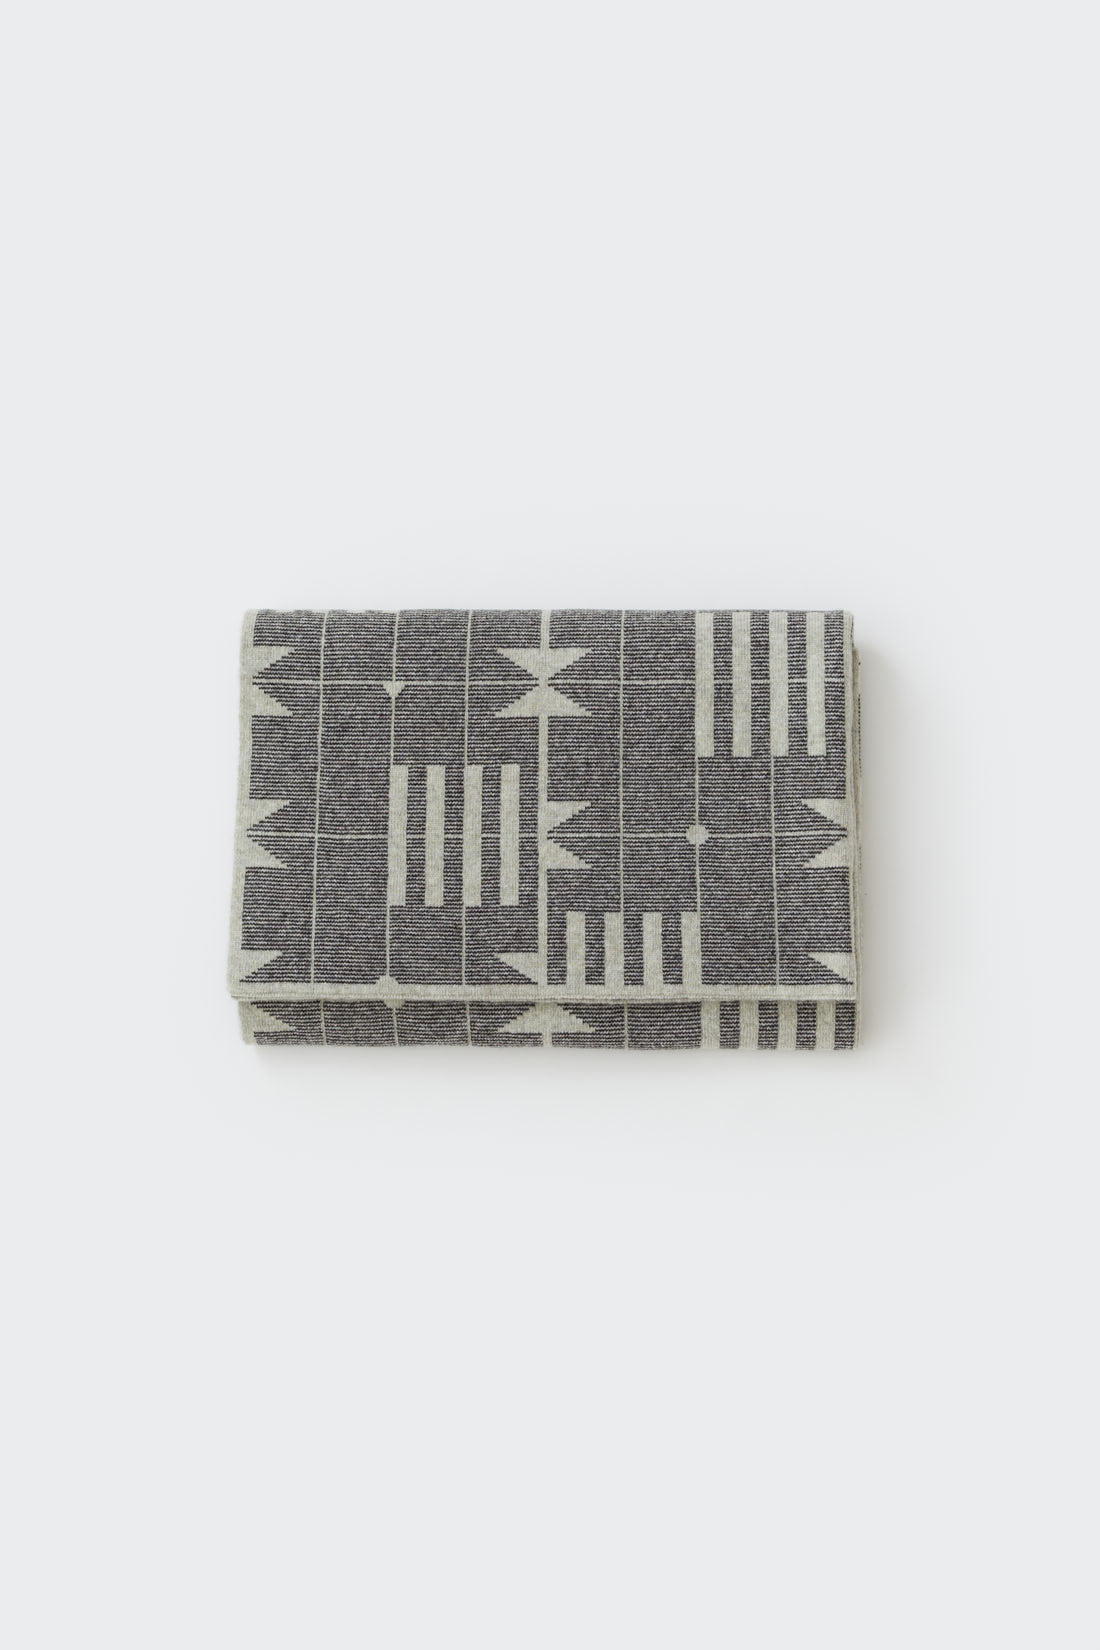 Mini Blanket "Dovetail" - Charcoal + Birch